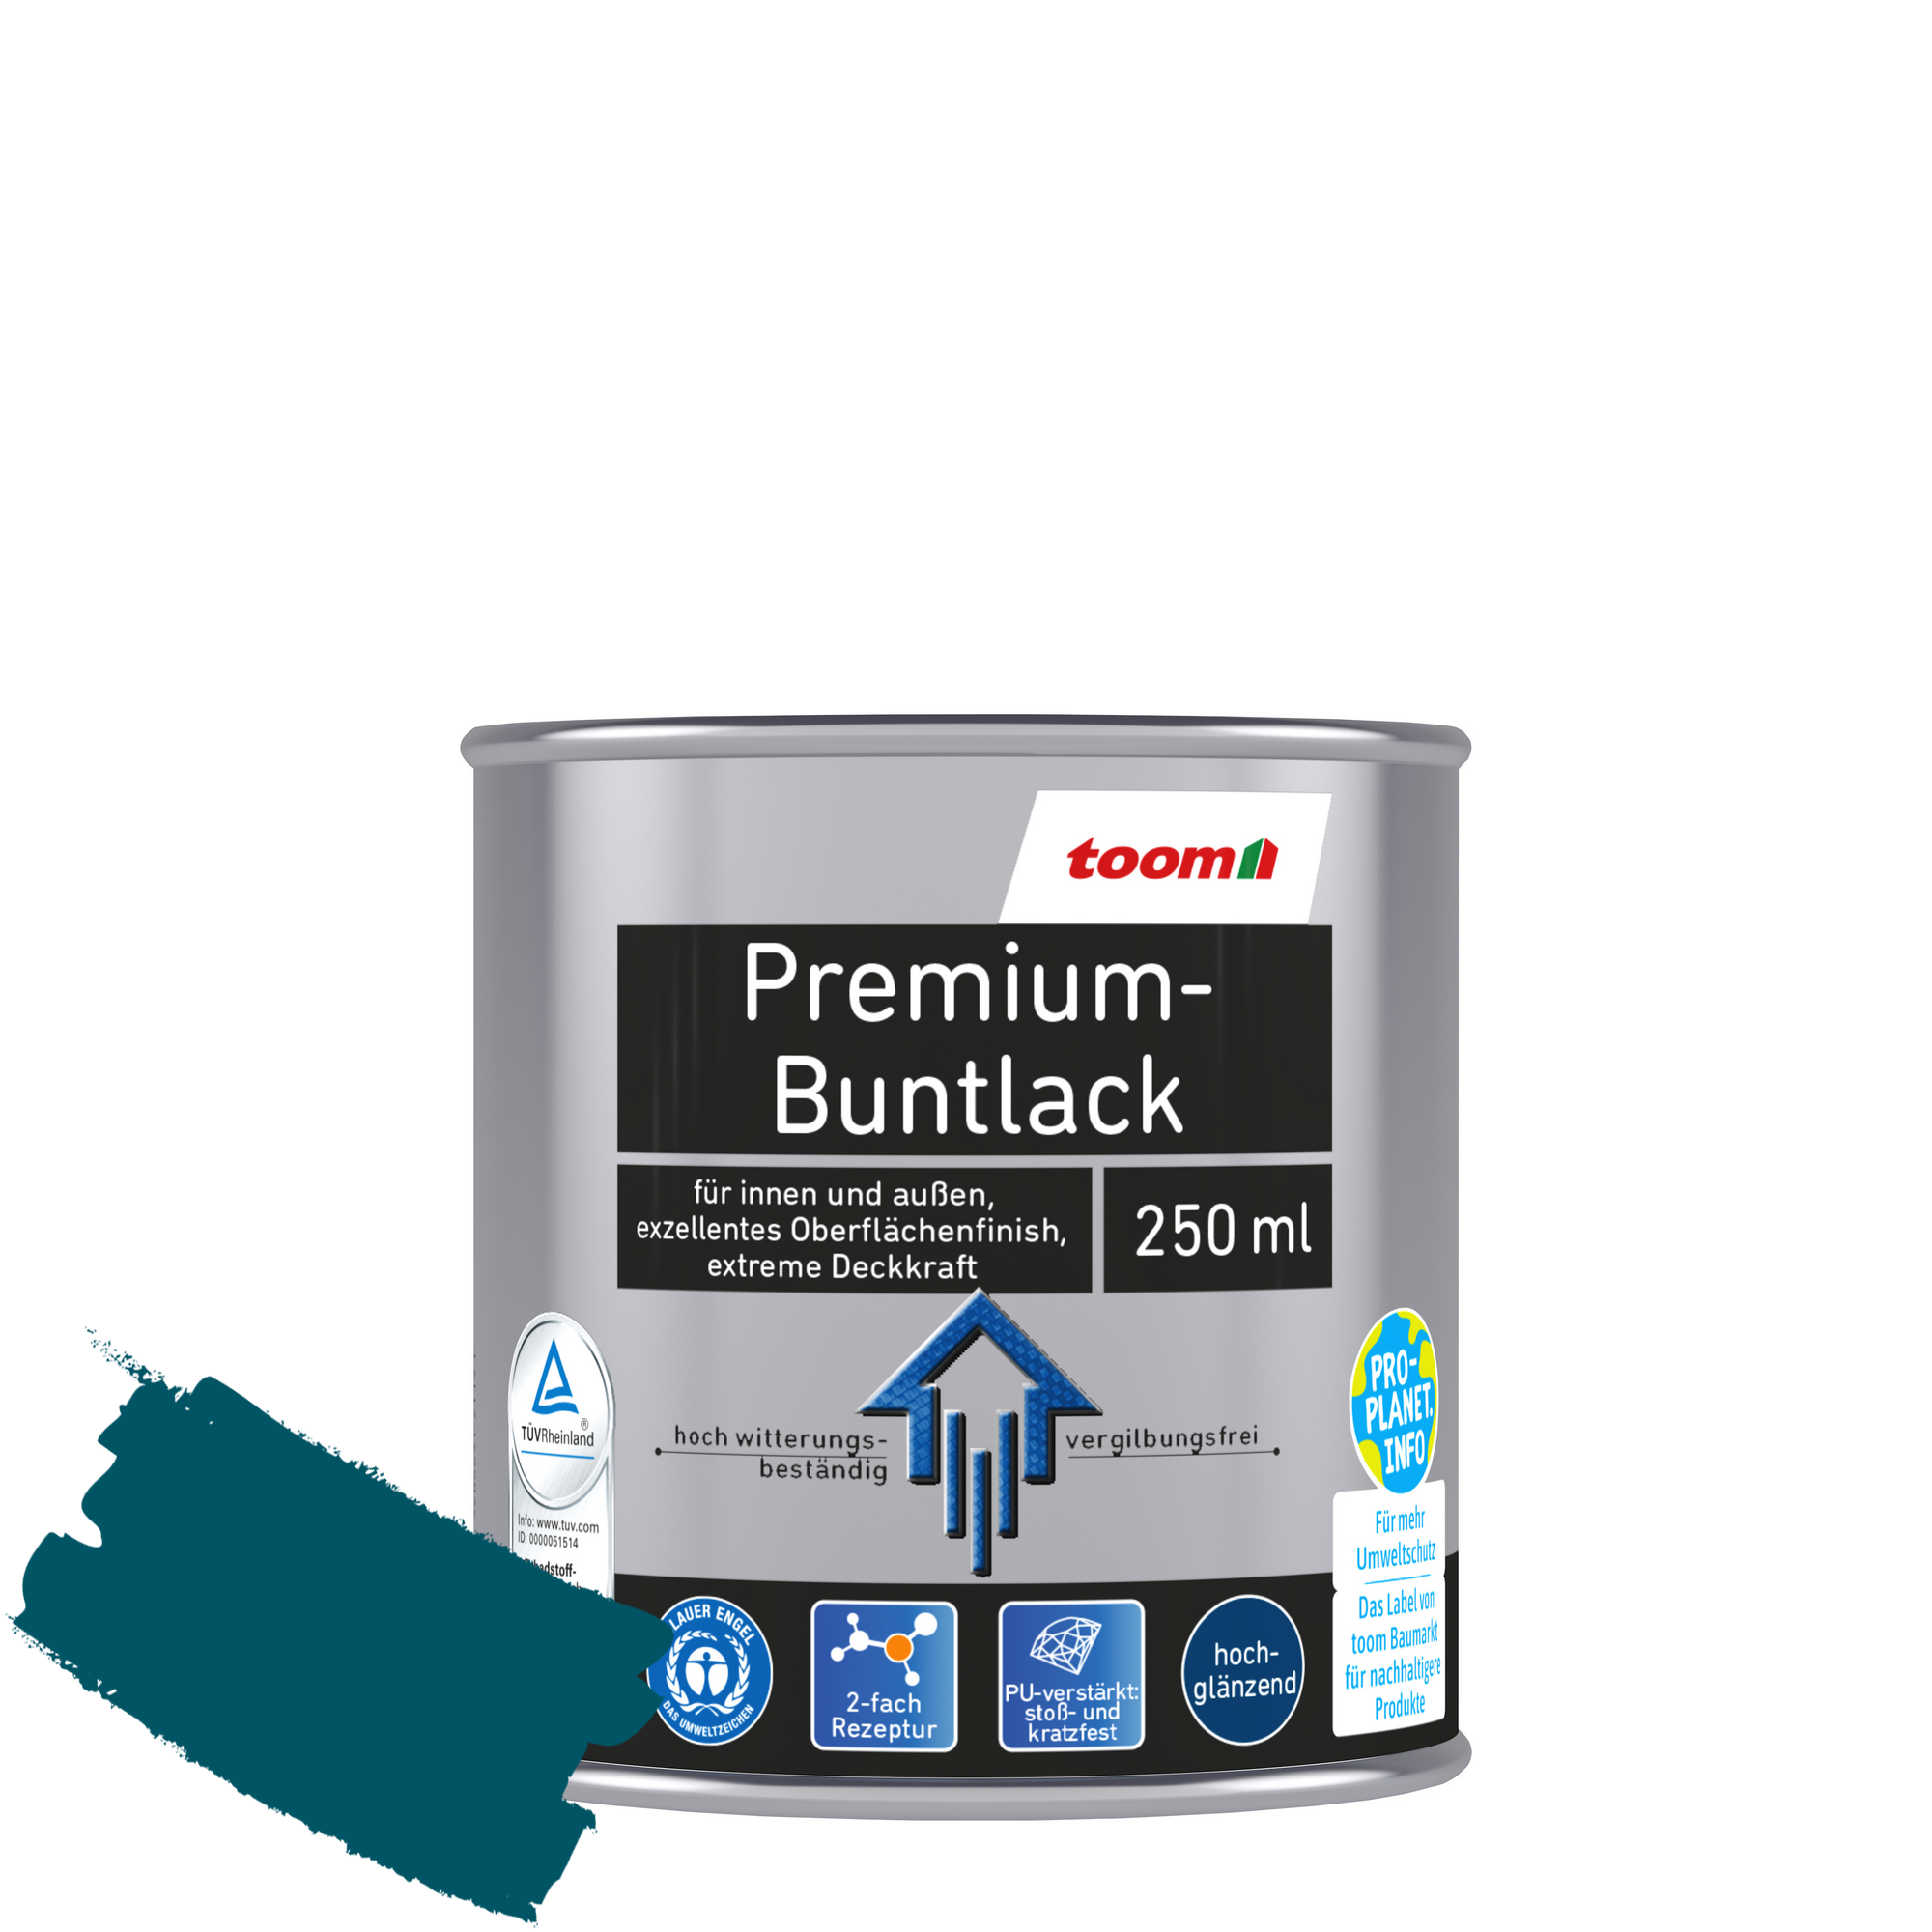 Premium-Buntlack petrolfarben glänzend 250 ml + product picture